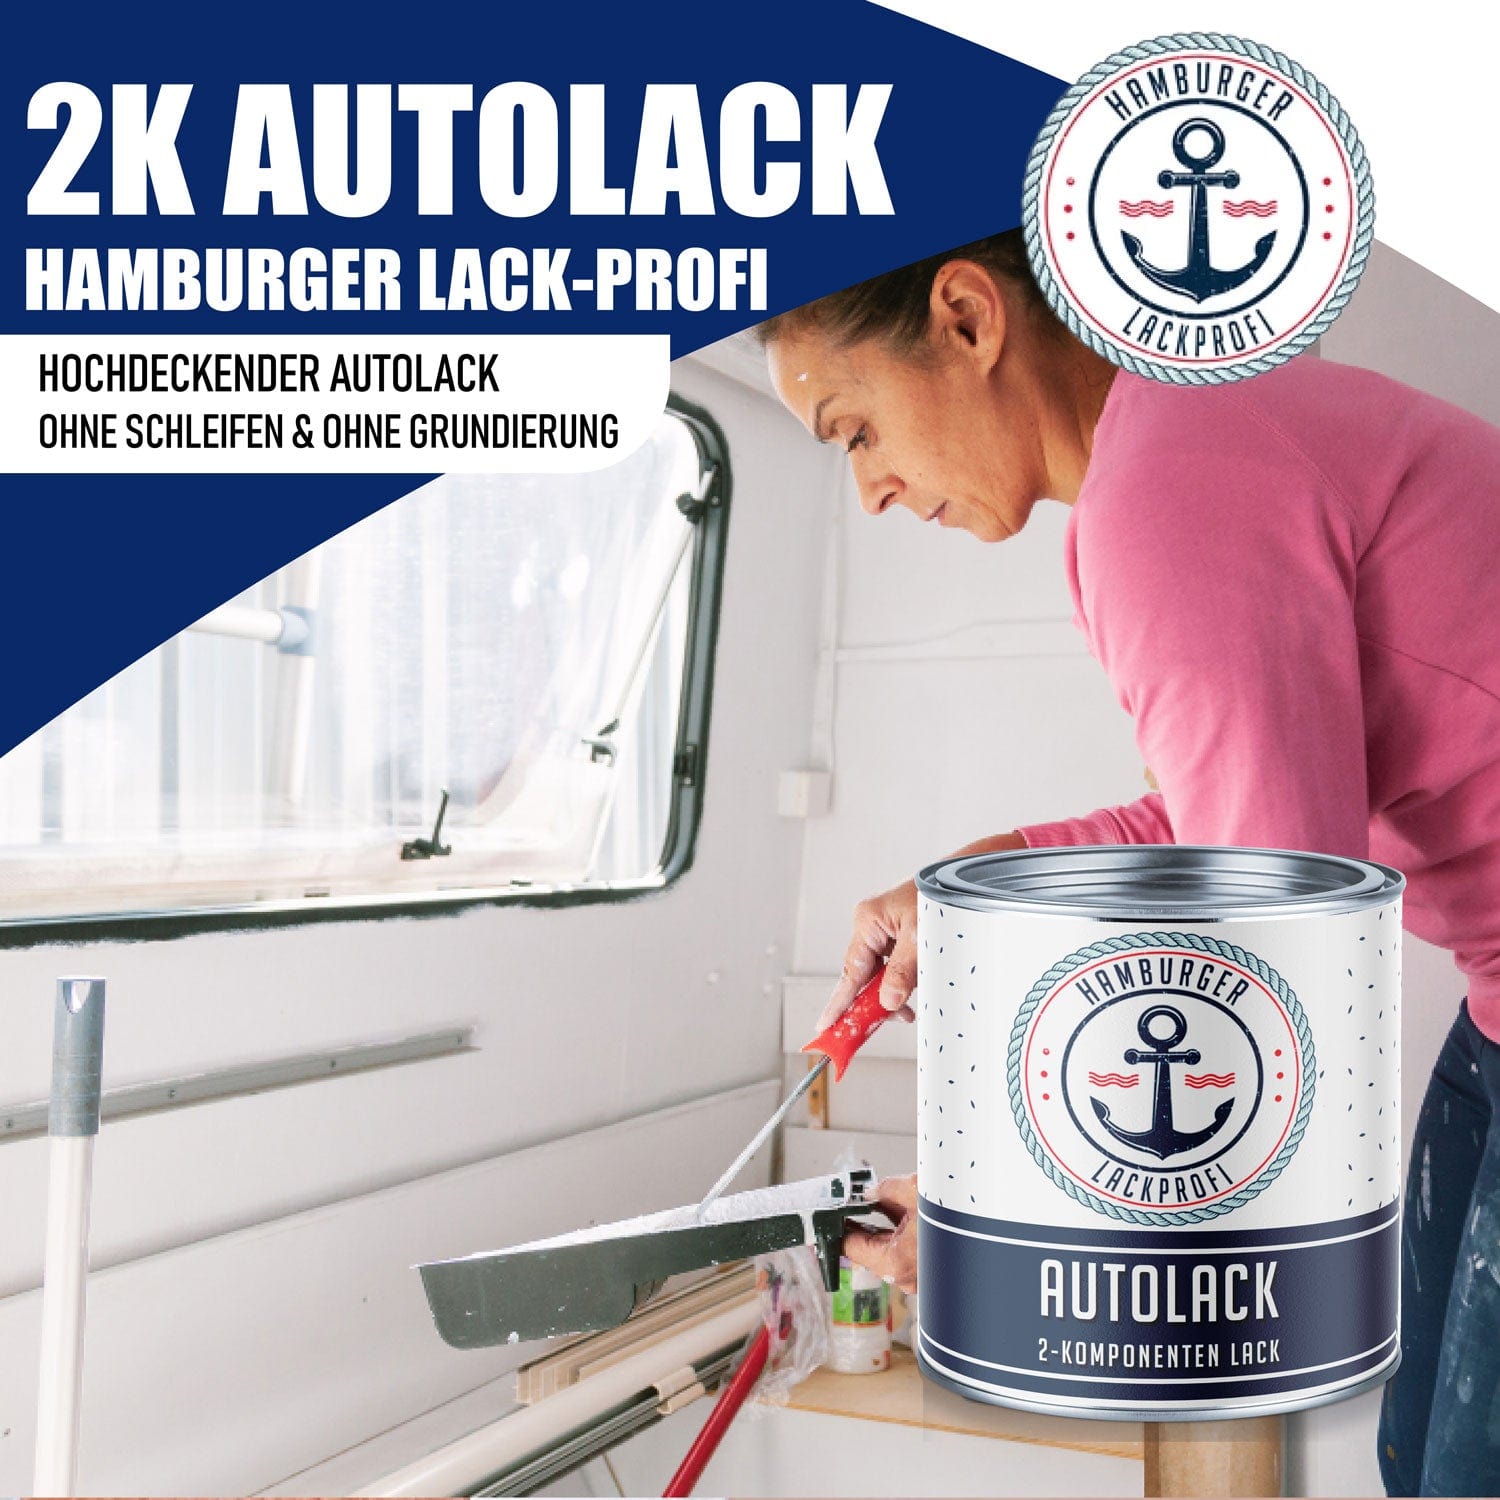 Hamburger Lack-Profi Lacke & Beschichtungen Hamburger Lack-Profi 2K Autolack in Signalgrün RAL 6032 mit Lackierset (X300) & Verdünnung (1 L) - 30% Sparangebot